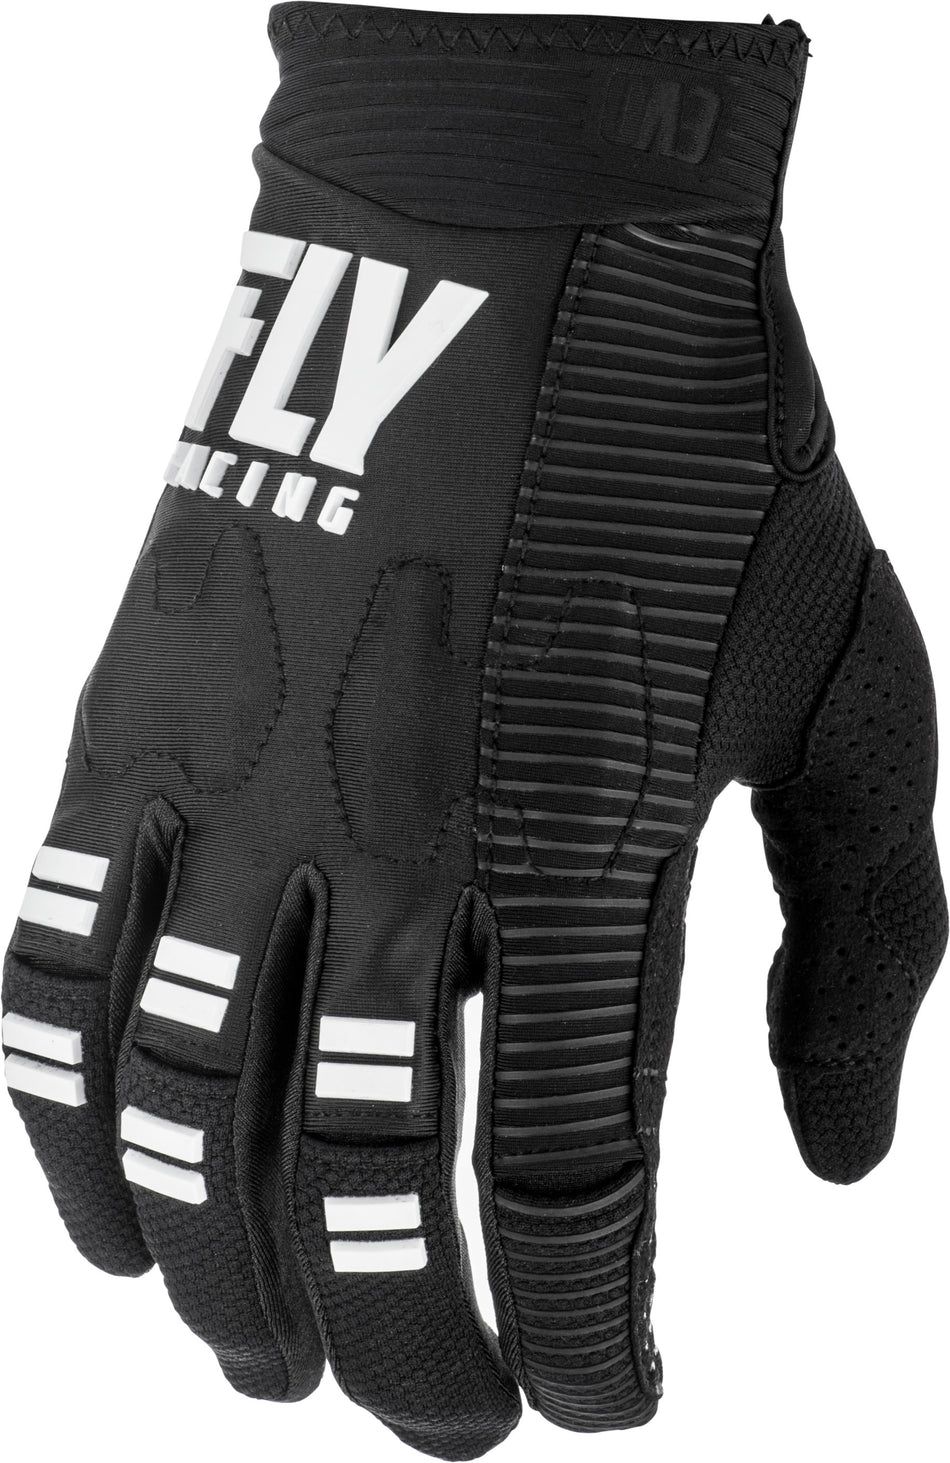 FLY RACING Evolution Dst Gloves Black/White Sz 08 372-11008